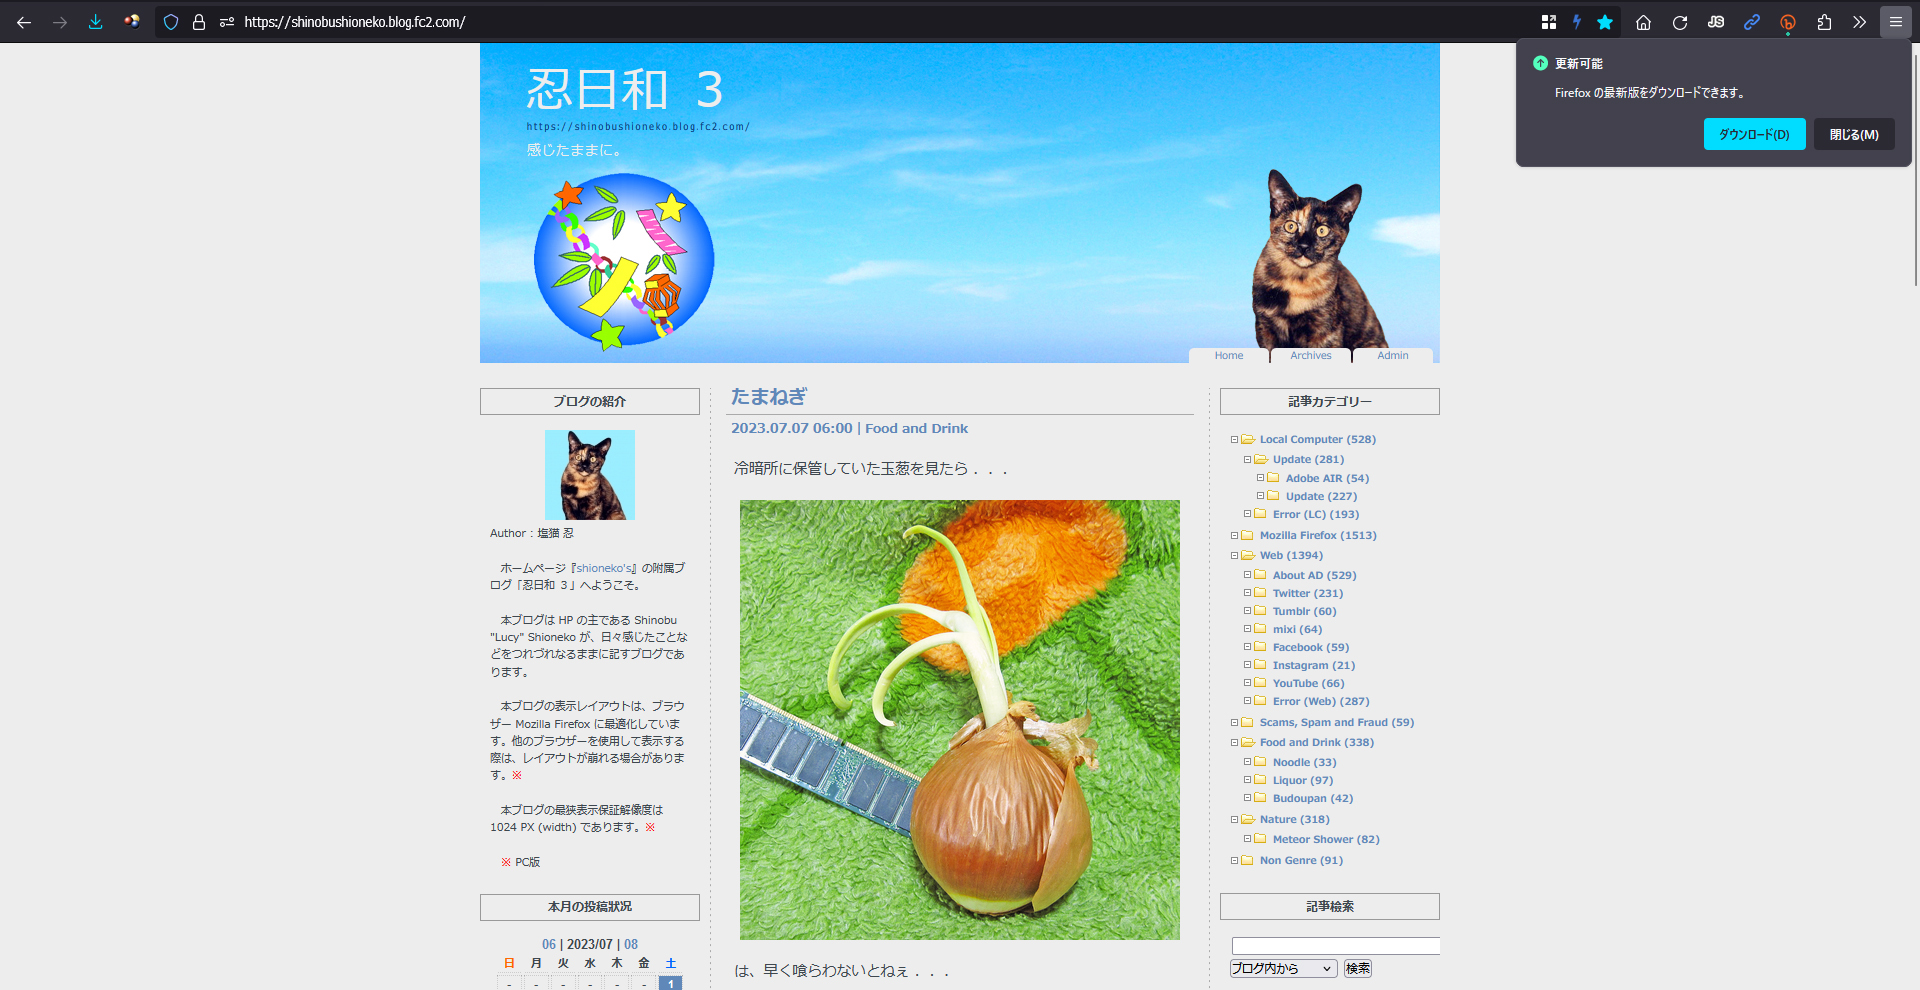 Mozilla Firefox 116.0 Beta 2